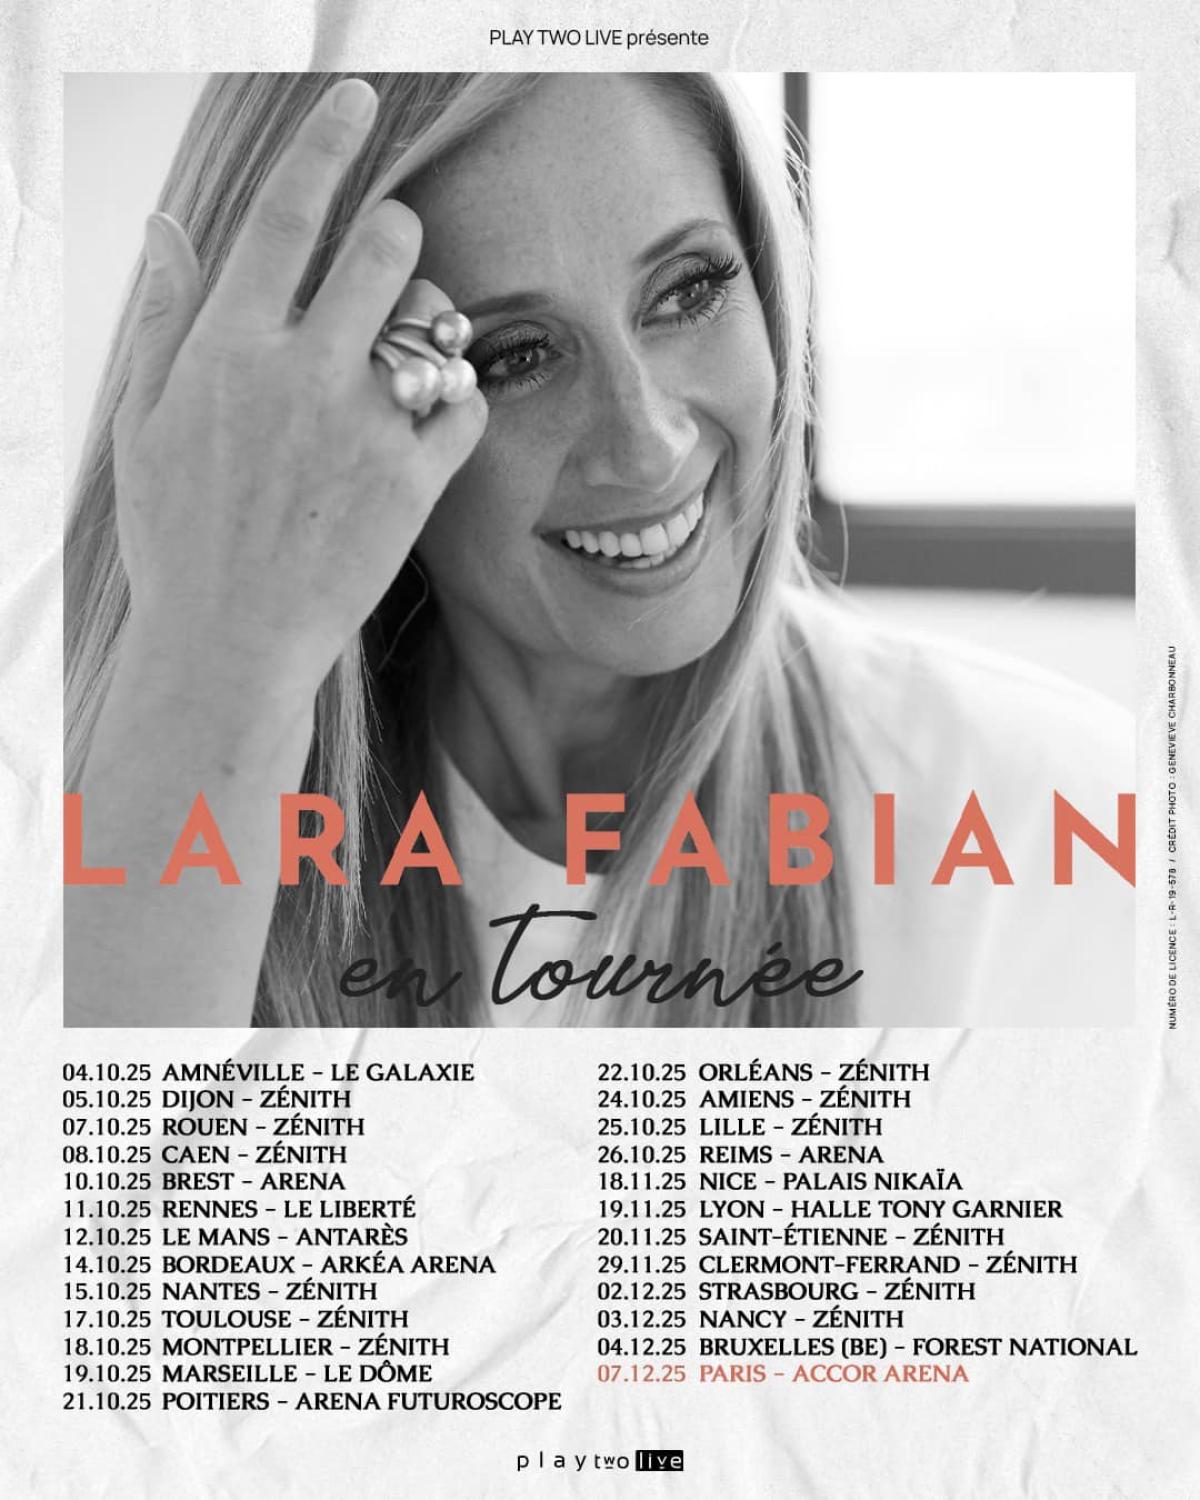 Lara Fabian al Arena Futuroscope Tickets